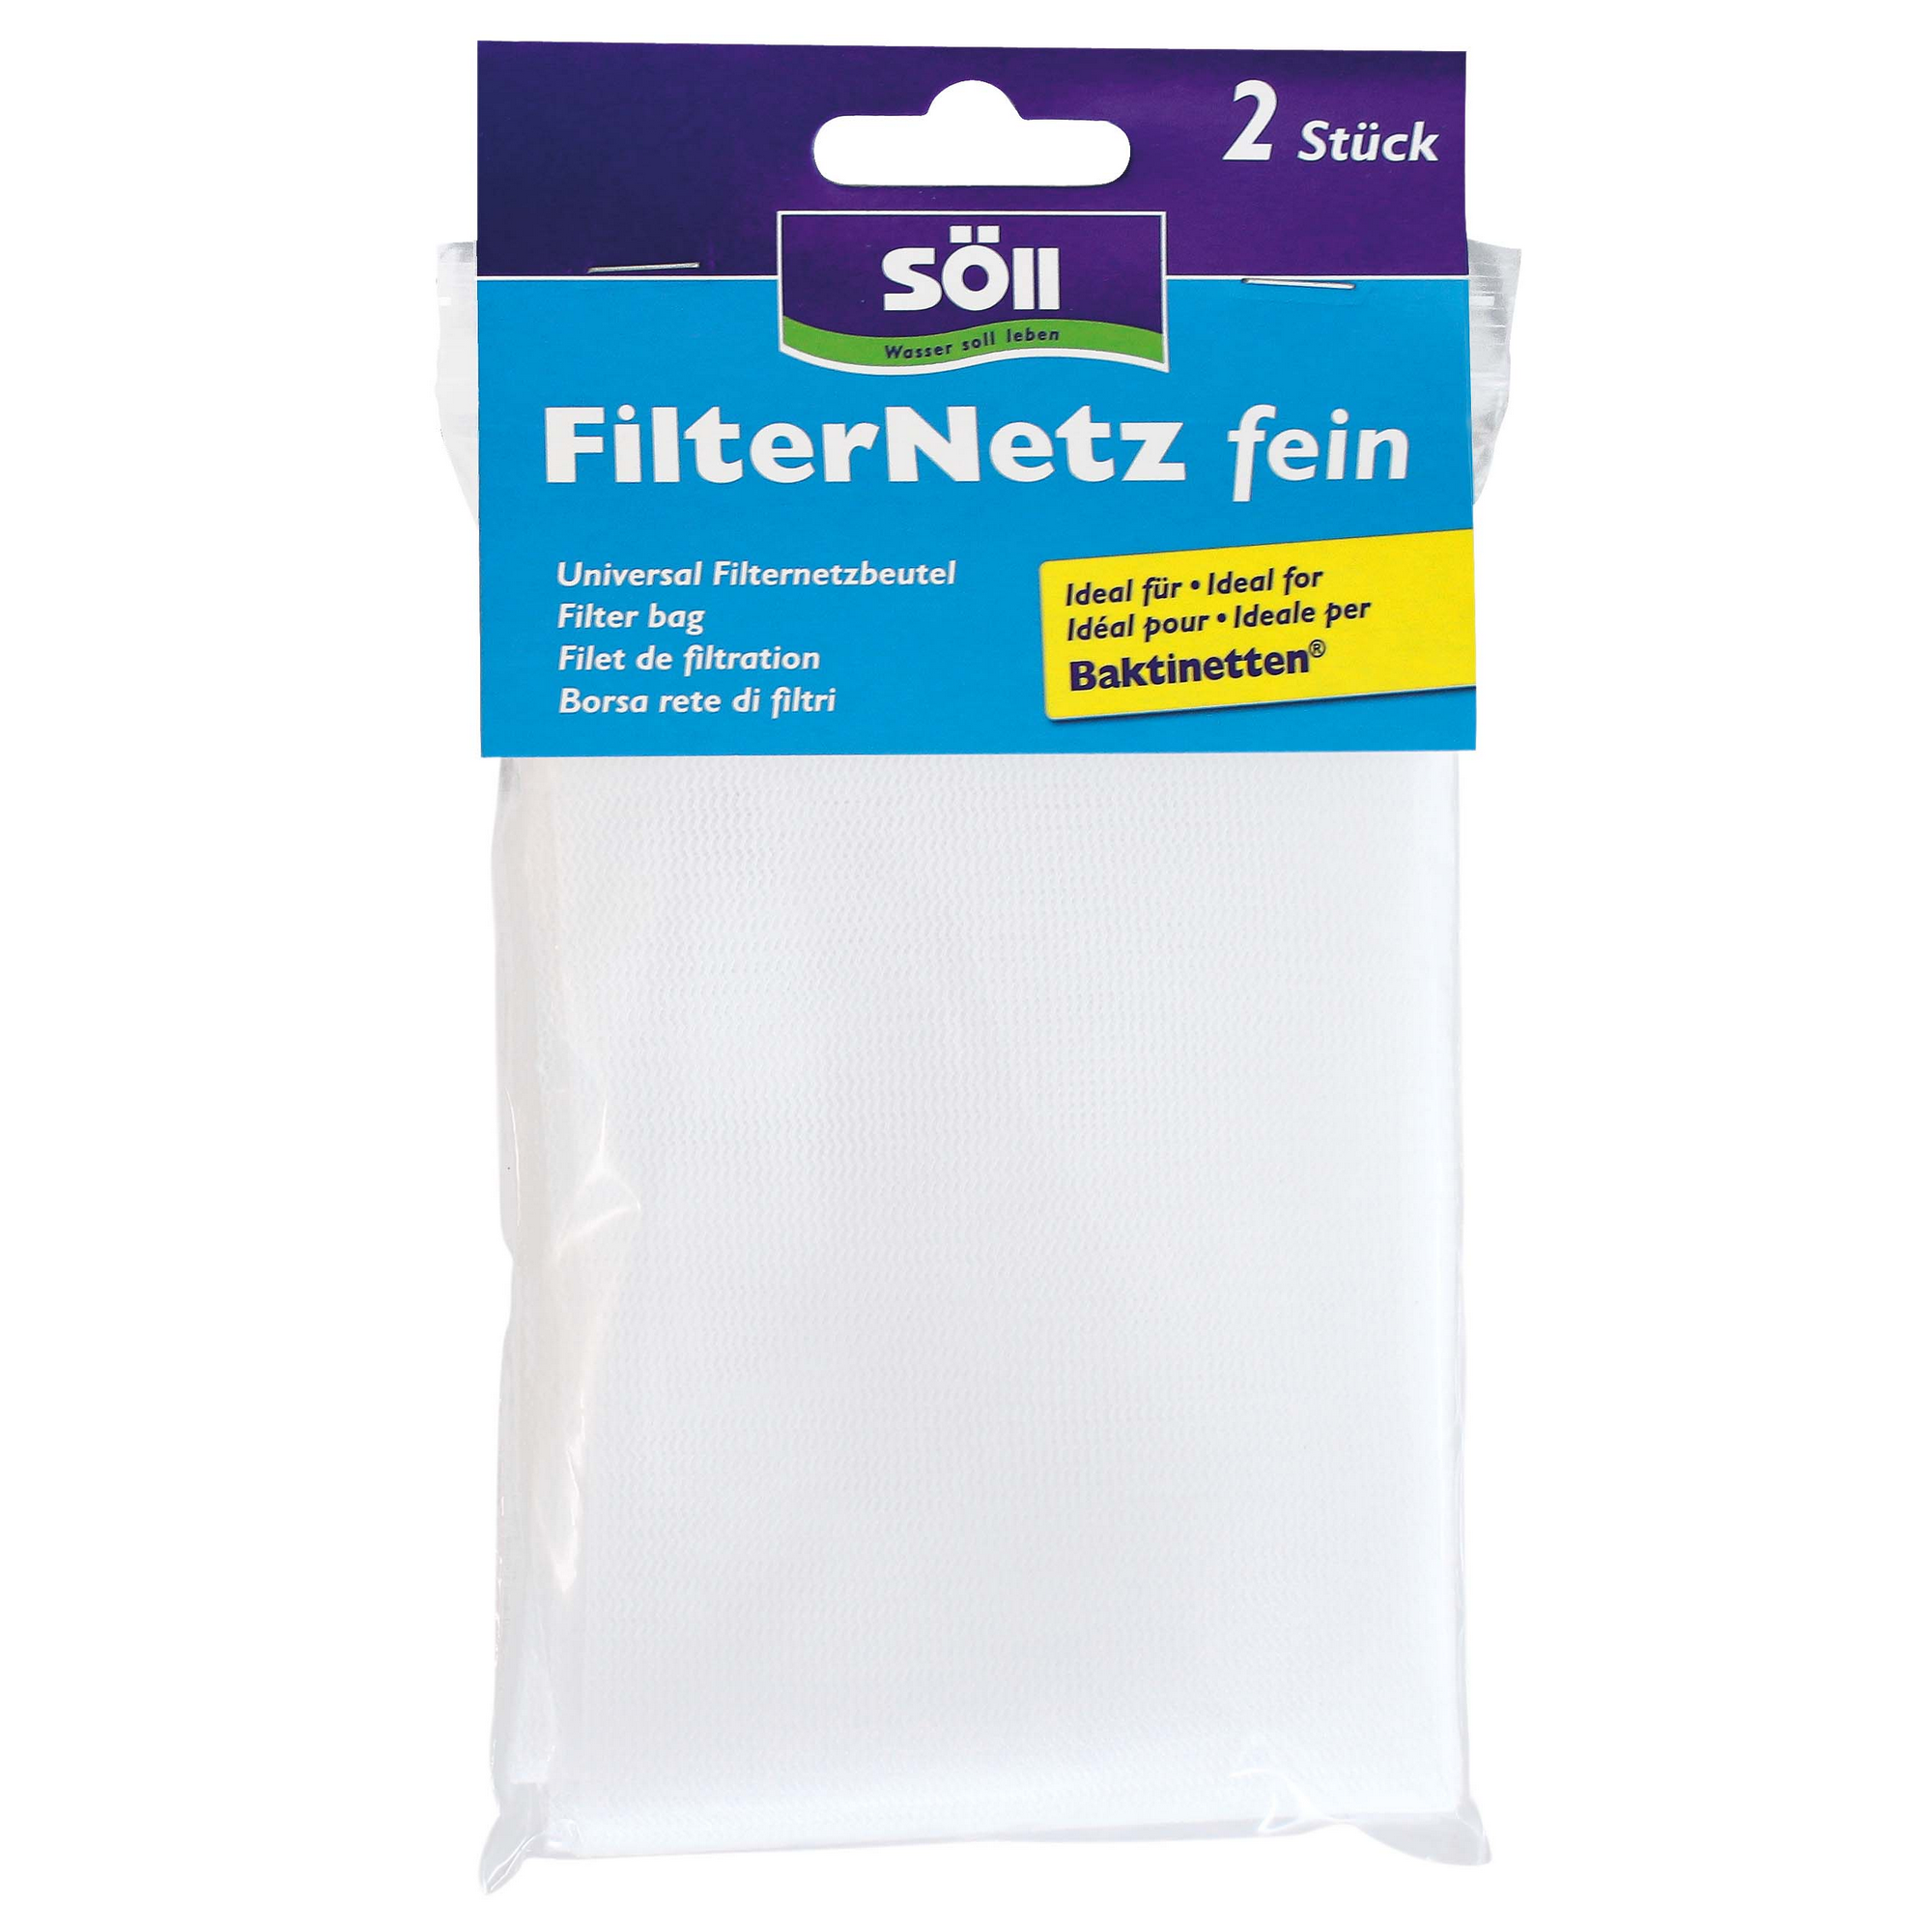 Filter-Netz fein weiß 2 Stück + product picture